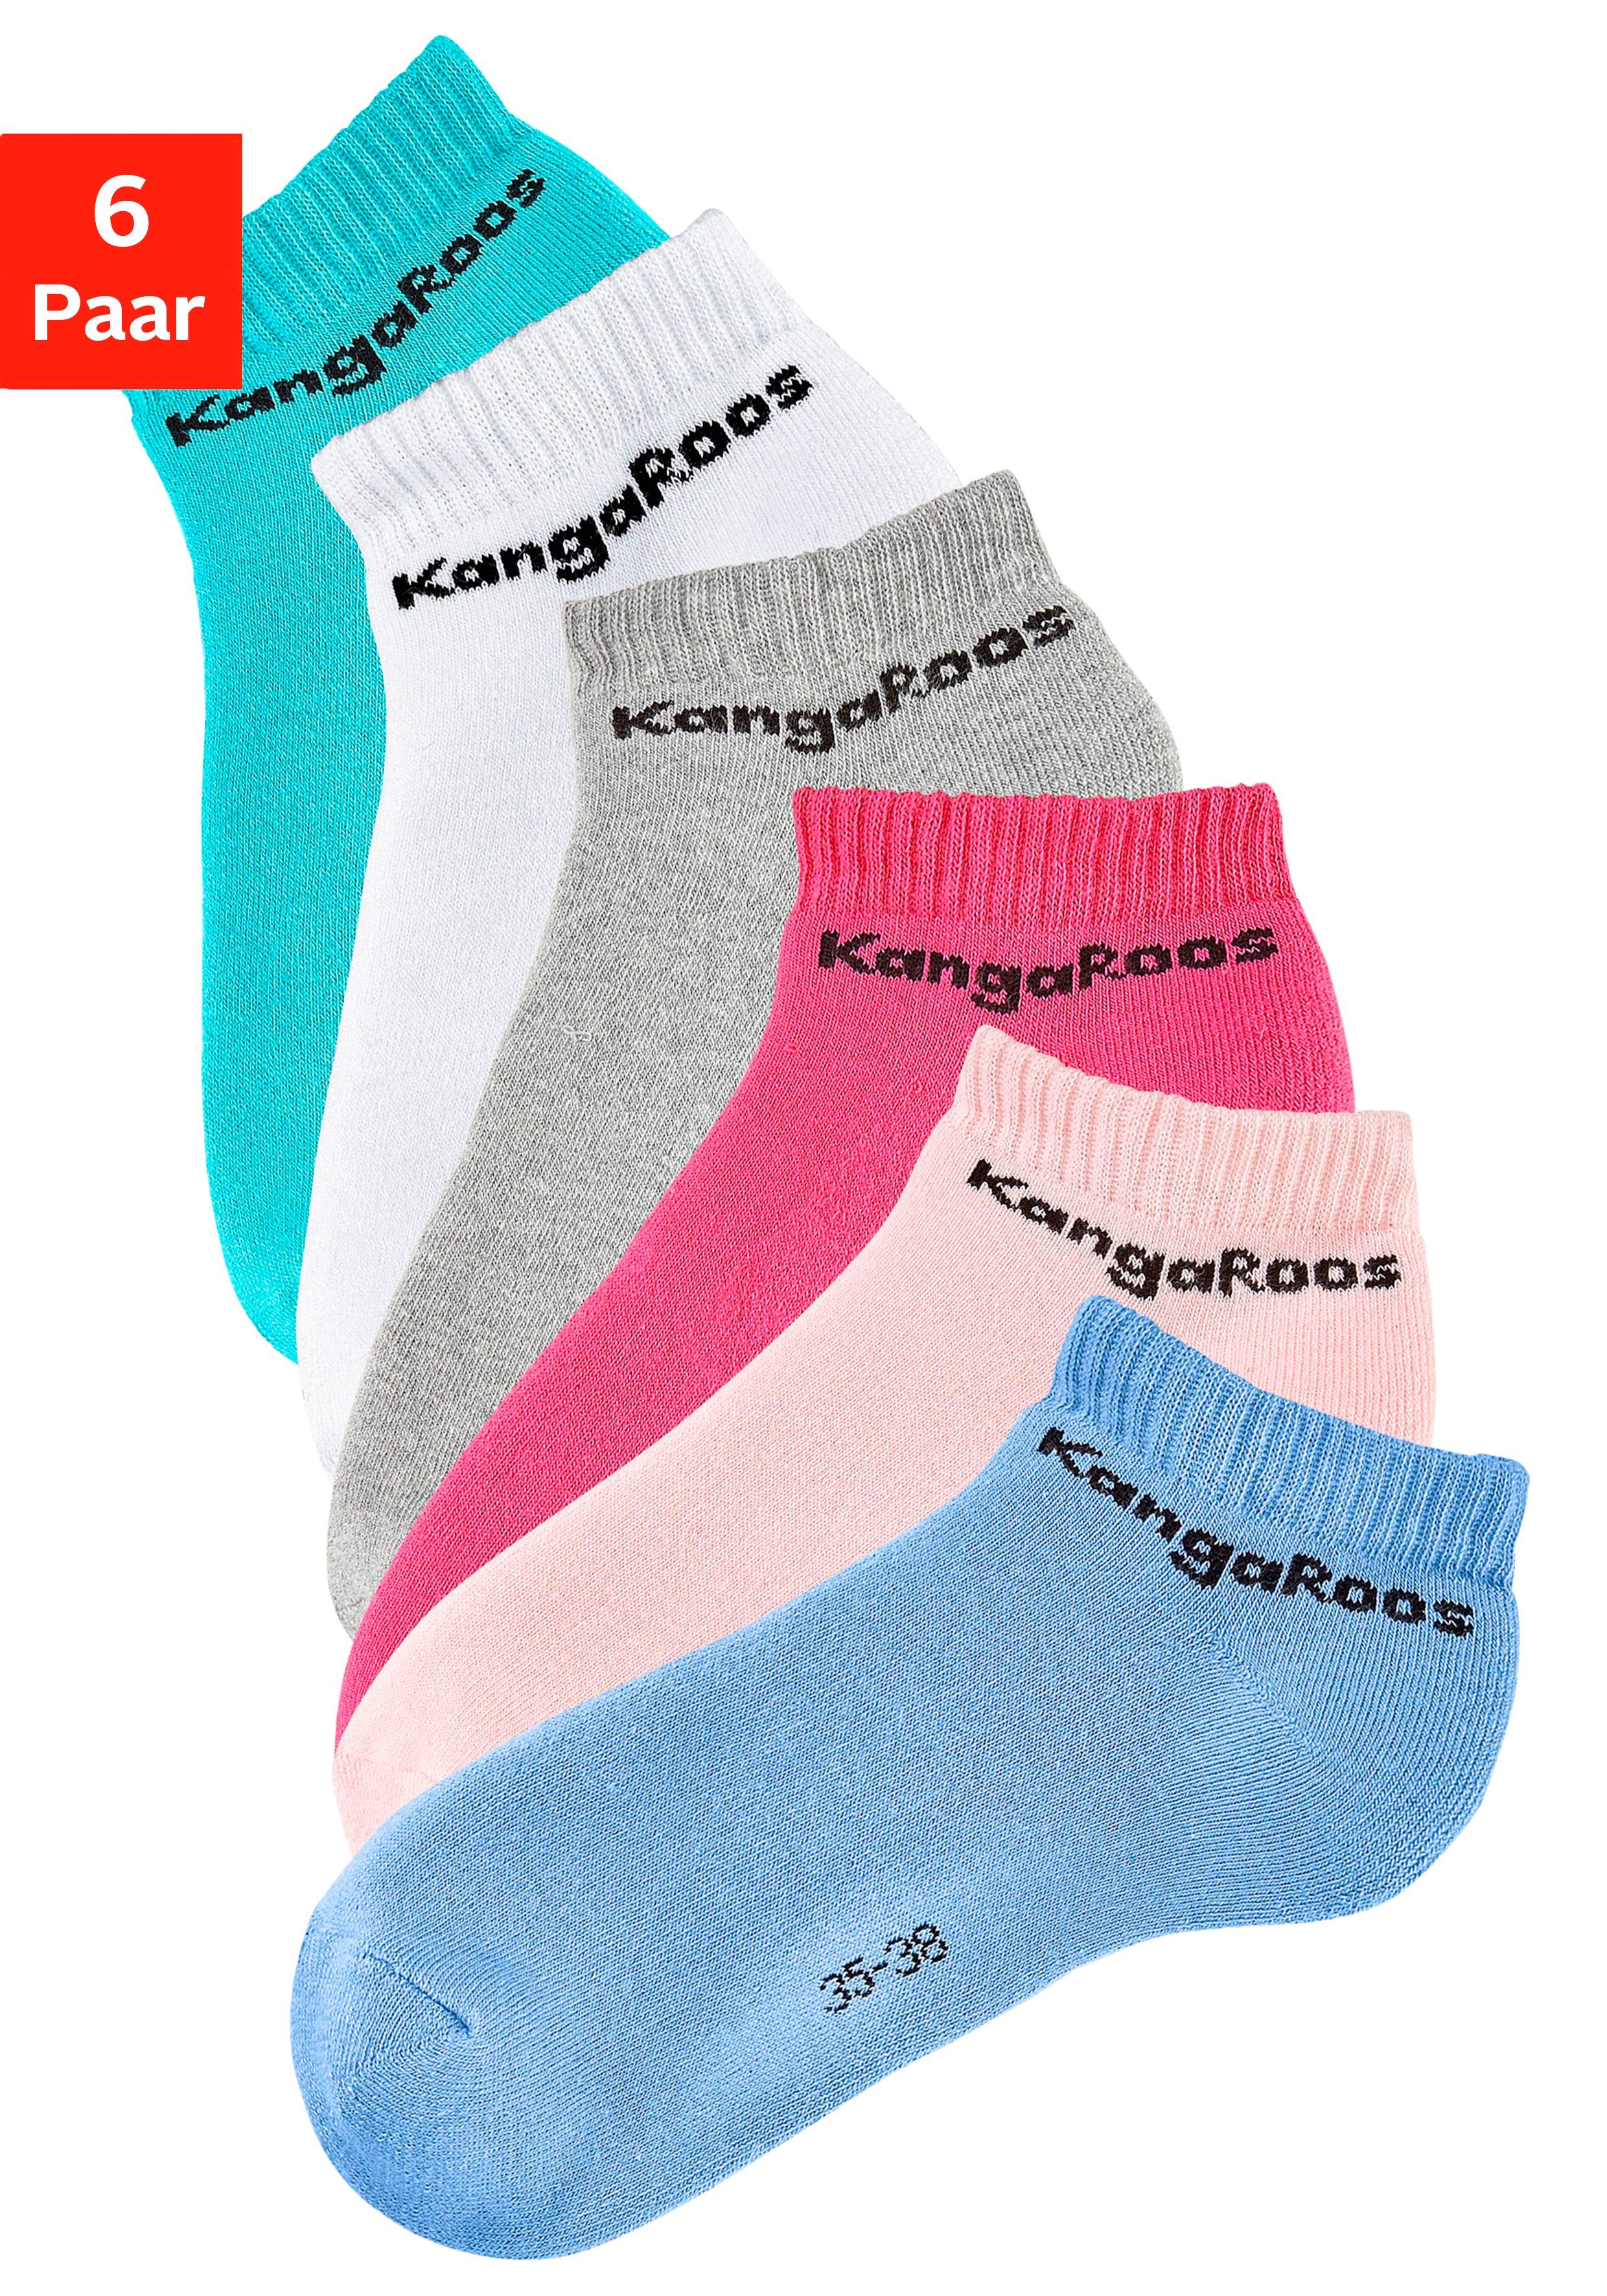 KangaROOS Sneakersocken (Set, 6-Paar) mit 1x mint, rosa, blau, 1x 1x weiß, 1x grau innen Frottee 1x 1x pink